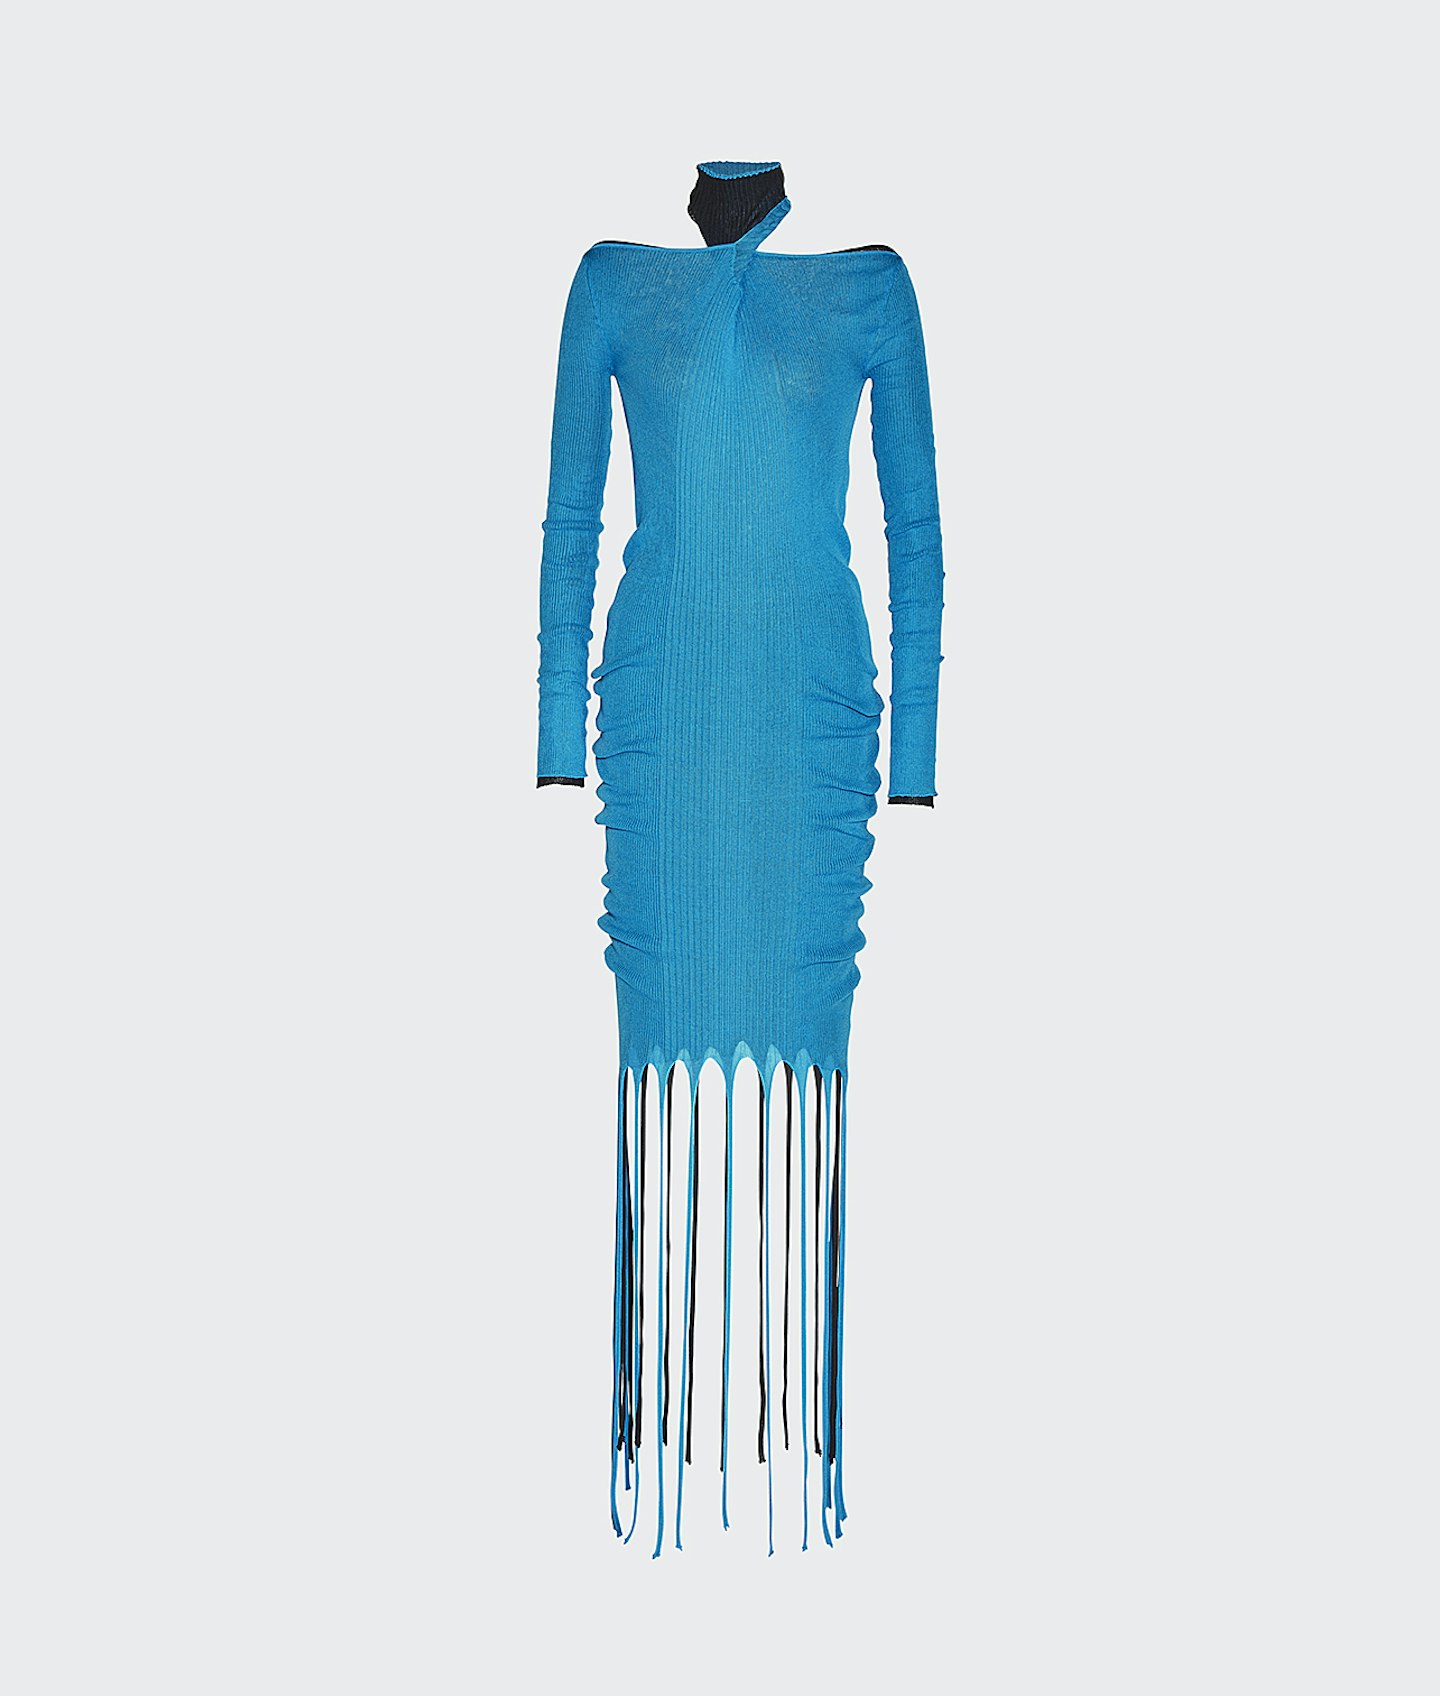 Bottega Veneta, Dress, £1,995